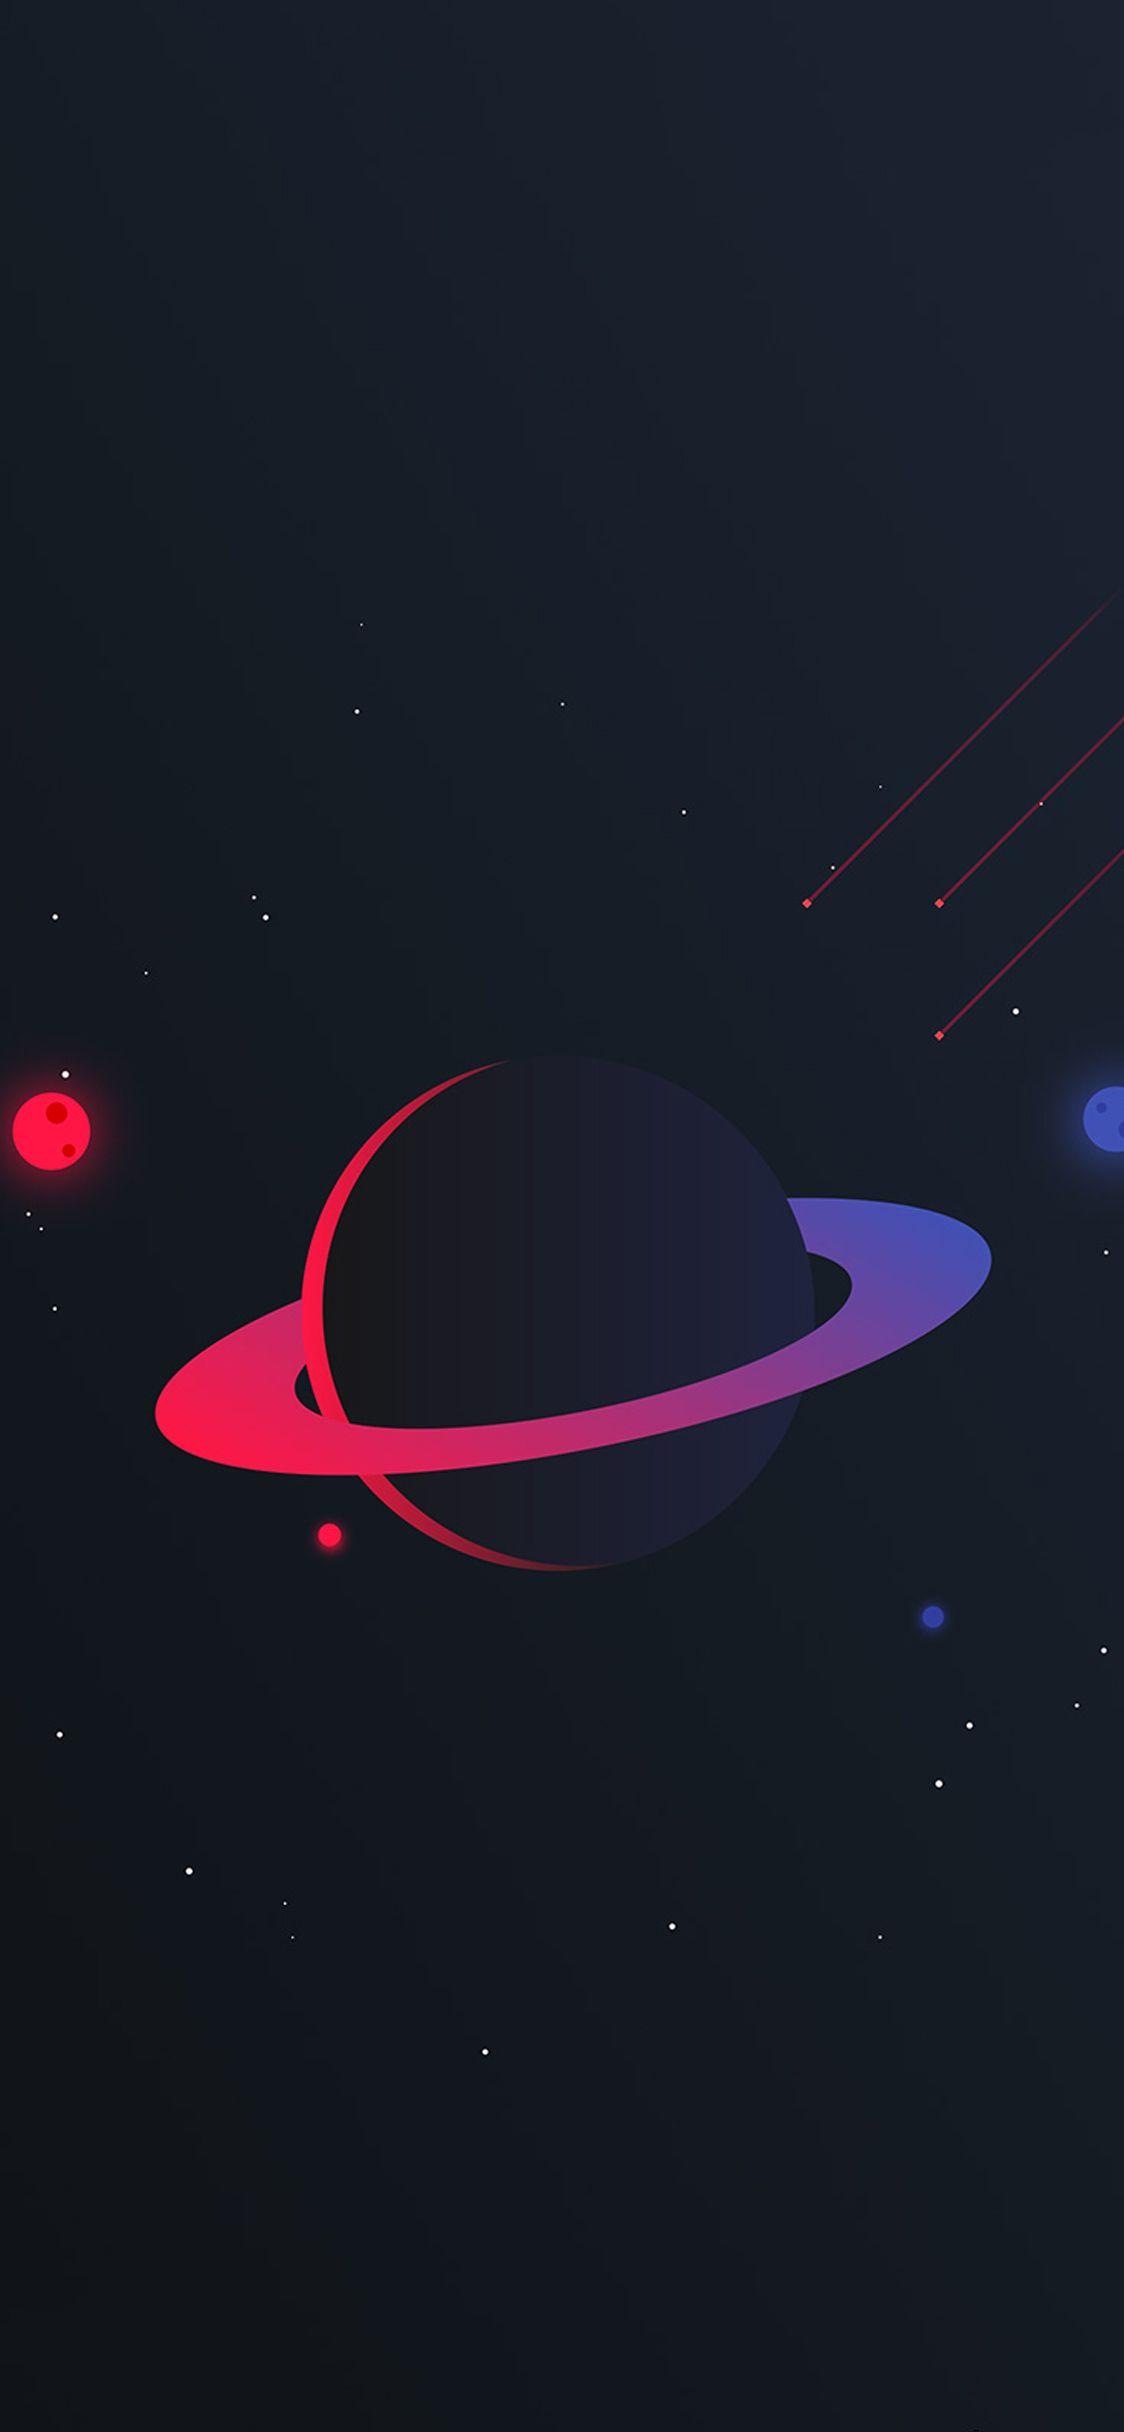 Saturn Planet wallpaper